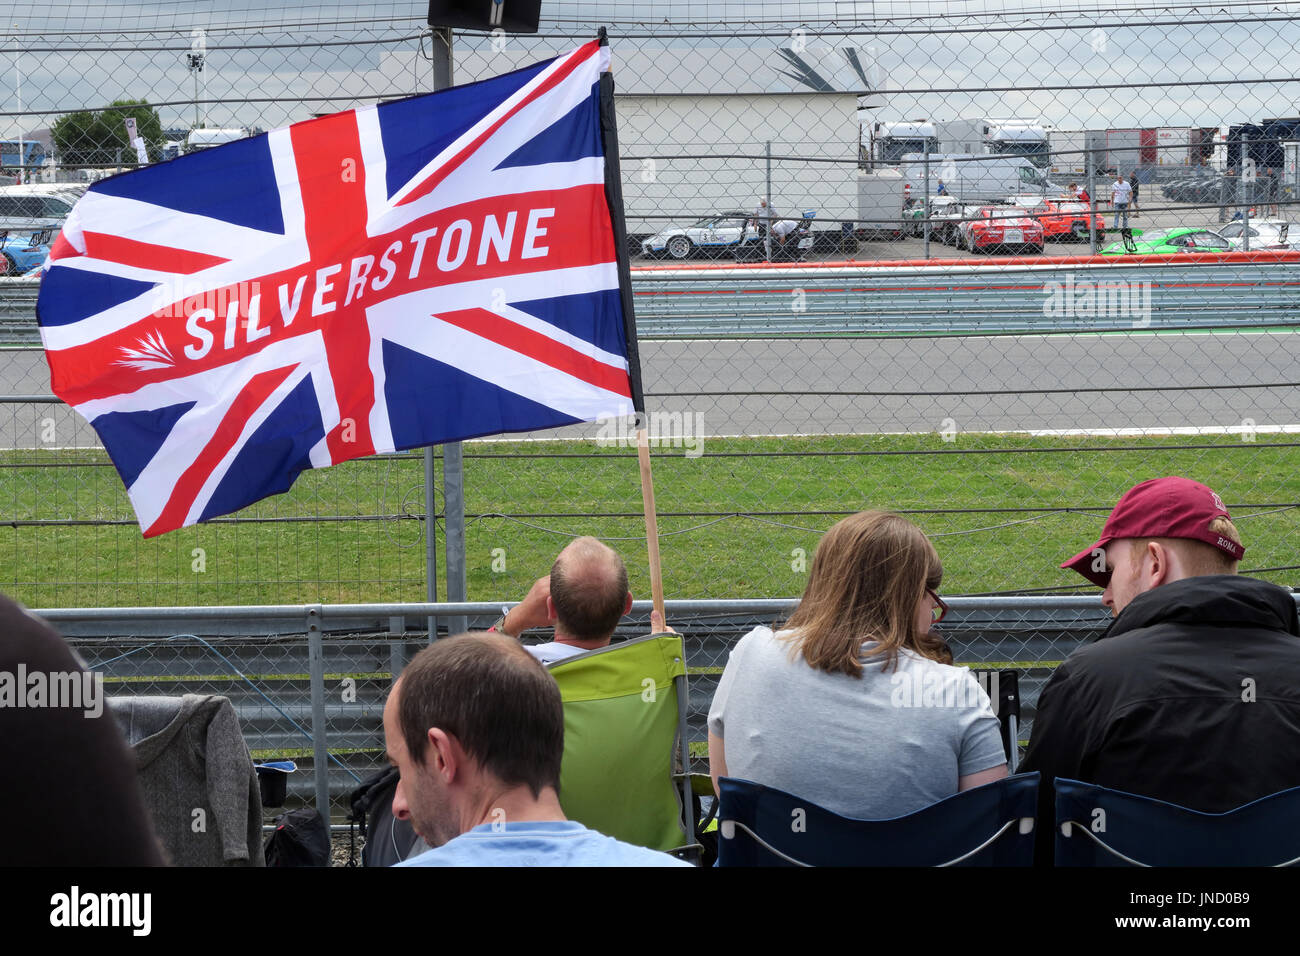 Silverstone-Flagge am Formel 1-Rennstrecke Stockfoto